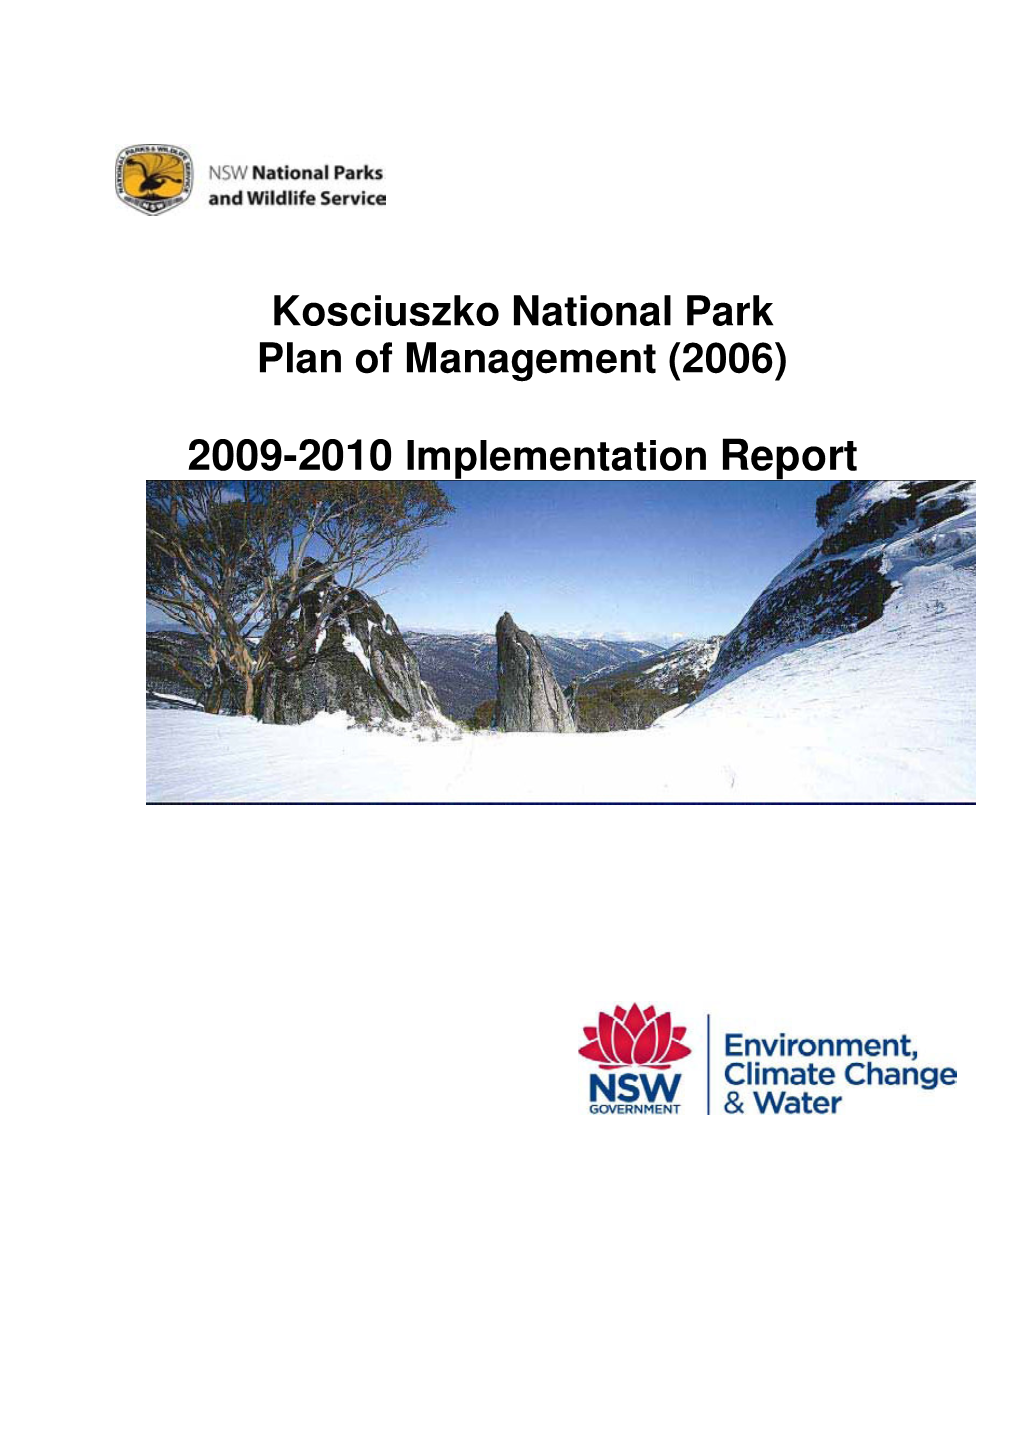 Kosciuszko National Park Plan of Management (2006)